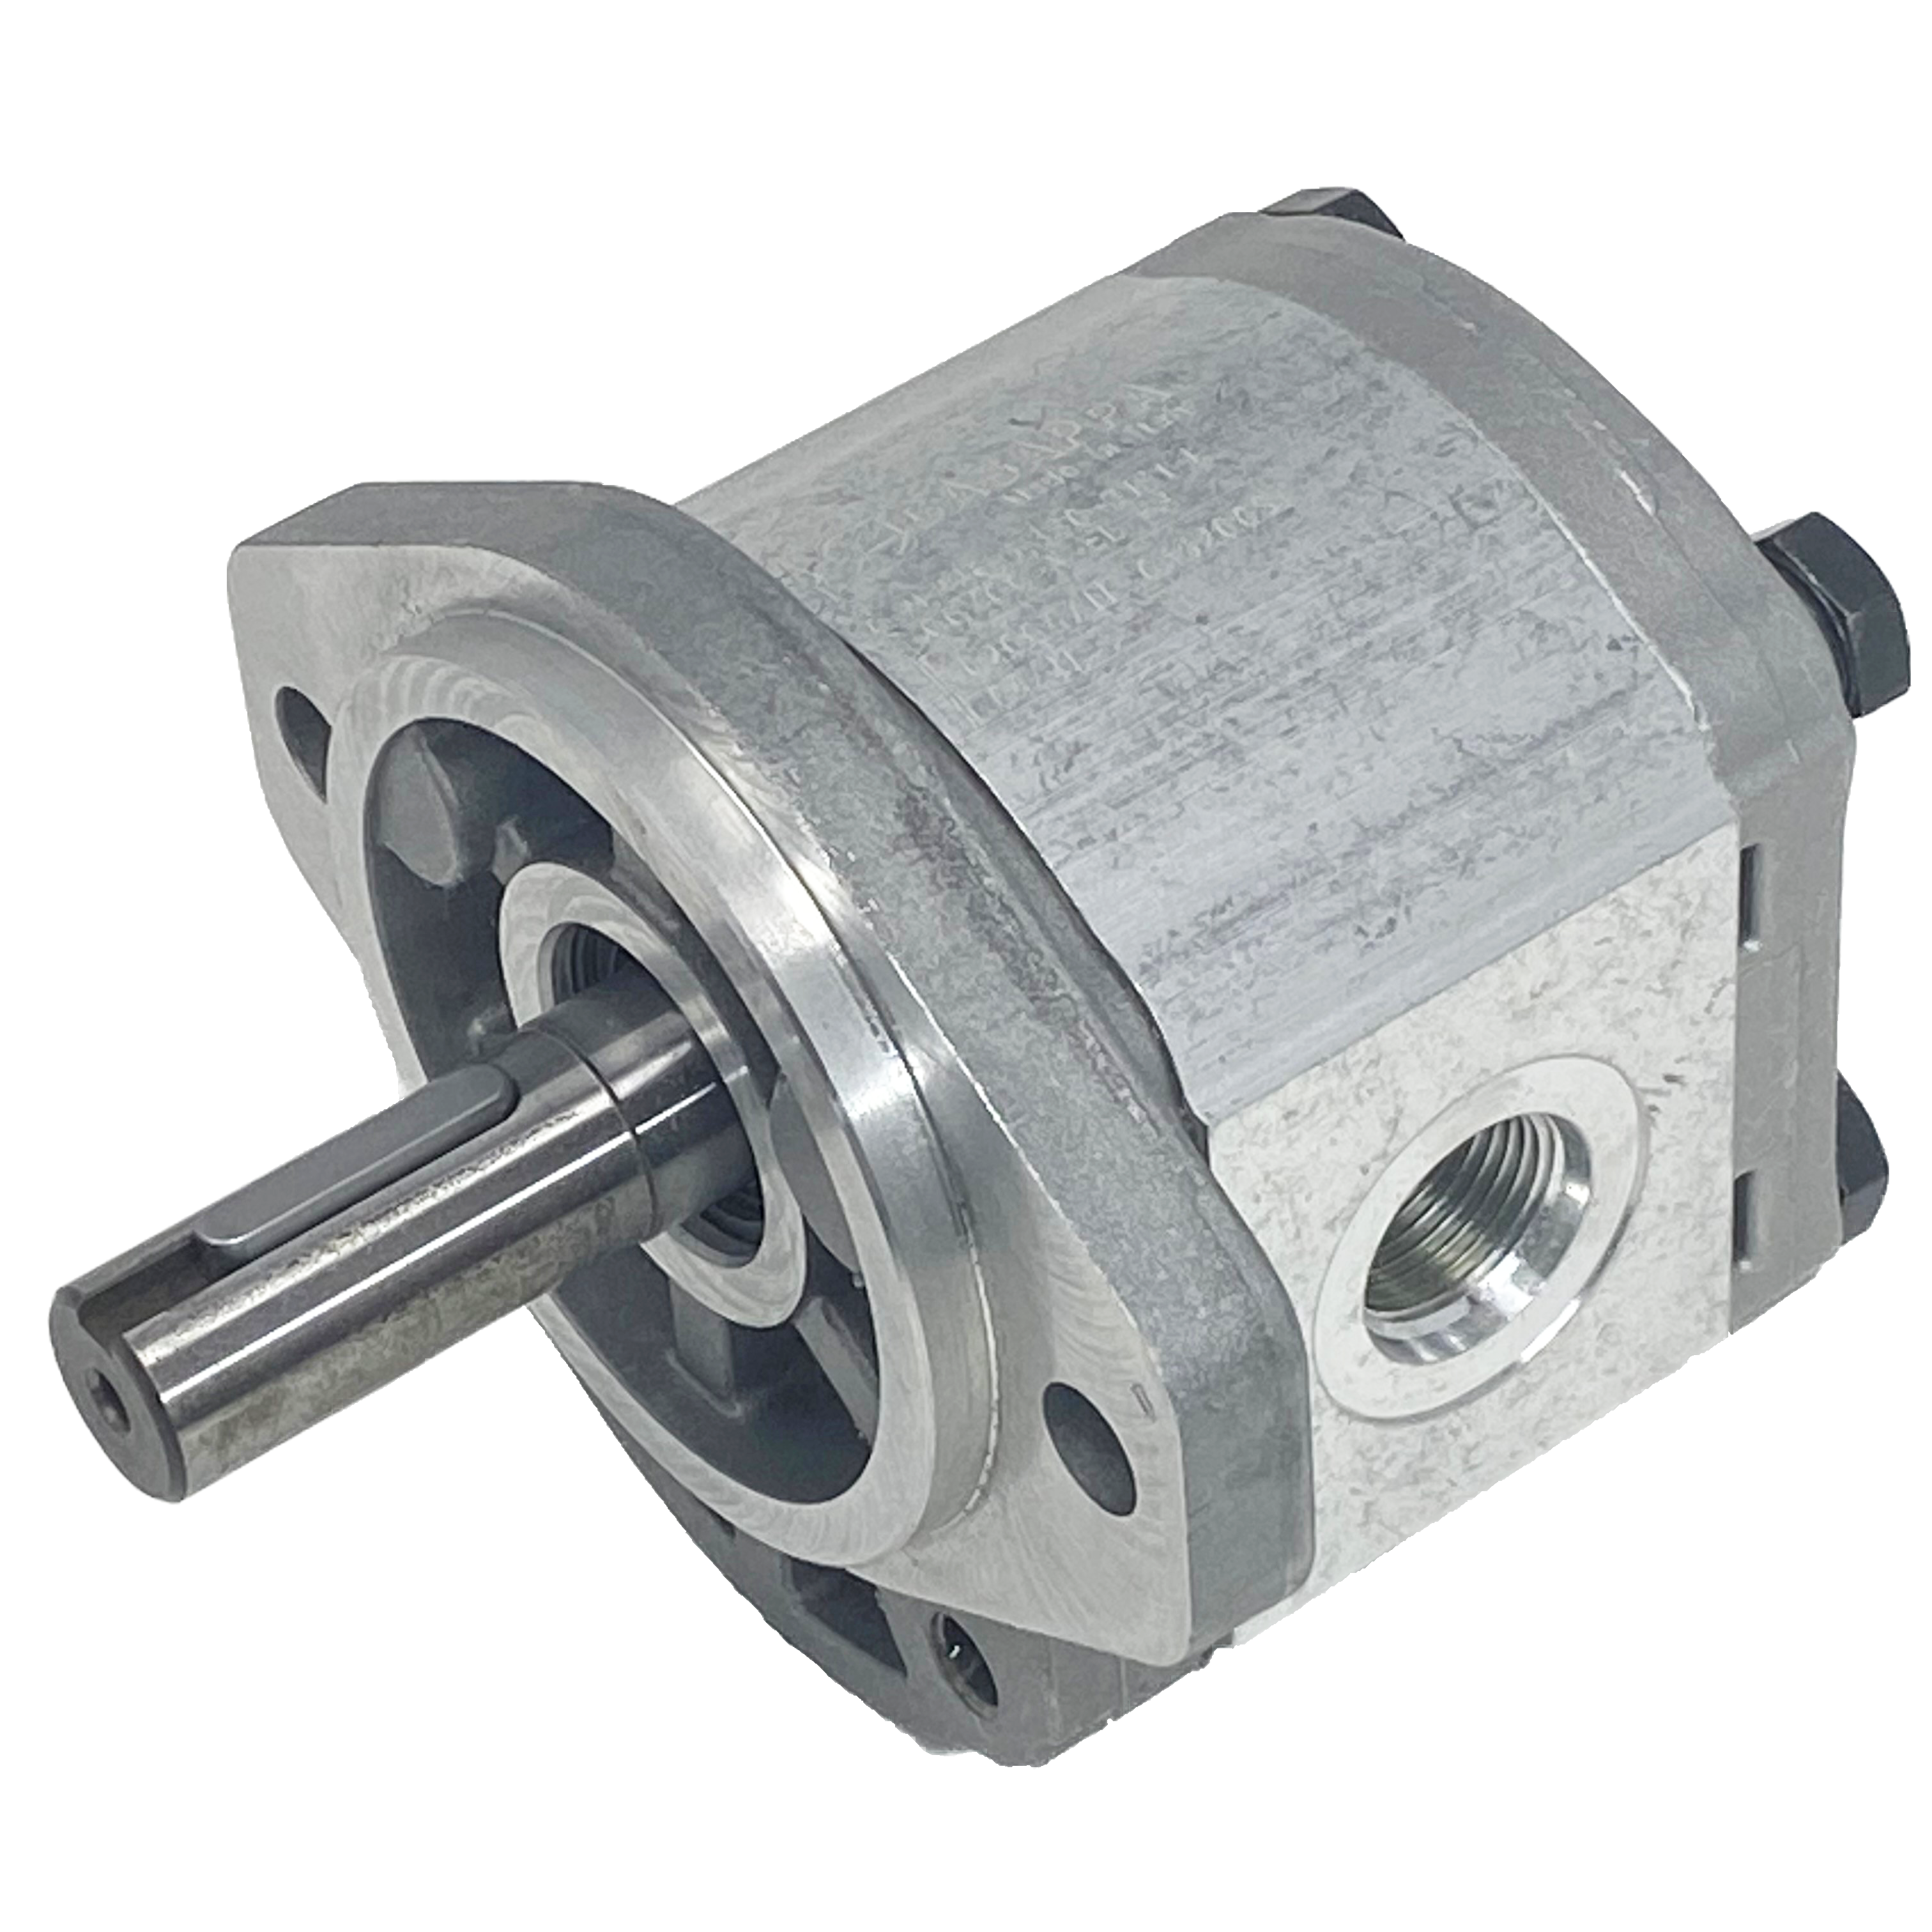 PLM20.14B0-49S1-LOC/OD-N-EL : Casappa Polaris Gear Motor, 14.53cc, 3625psi Rated, 3500RPM, Reversible Interior Drain, 3/4" Bore x 3/16" Key Shaft, SAE A 2-Bolt Flange, 0.625 (5/8") #10 SAE Inlet, 0.75 (3/4") #12 SAE Outlet, Aluminum Body & Flange